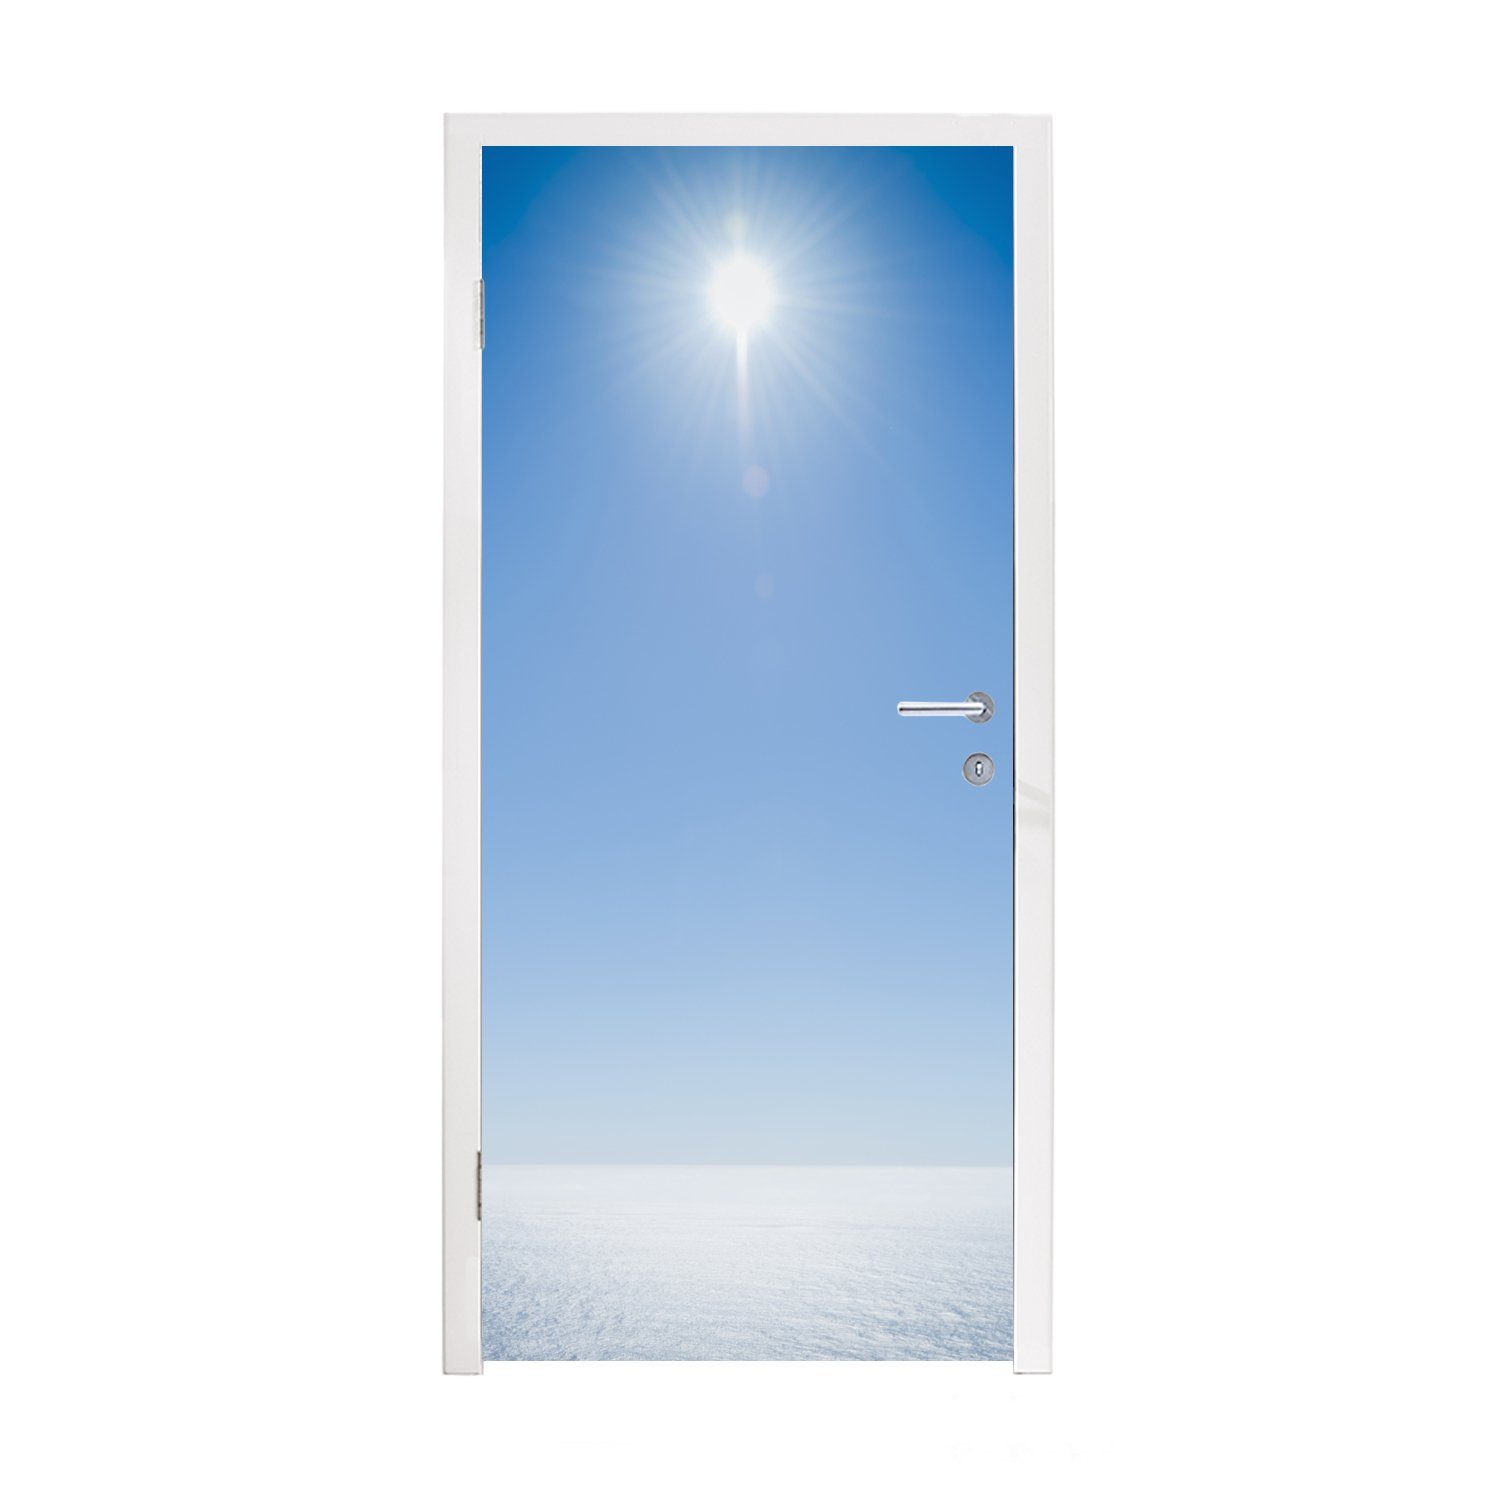 MuchoWow Türtapete Sommer - Meer - Sonne, Matt, bedruckt, (1 St), Fototapete für Tür, Türaufkleber, 75x205 cm